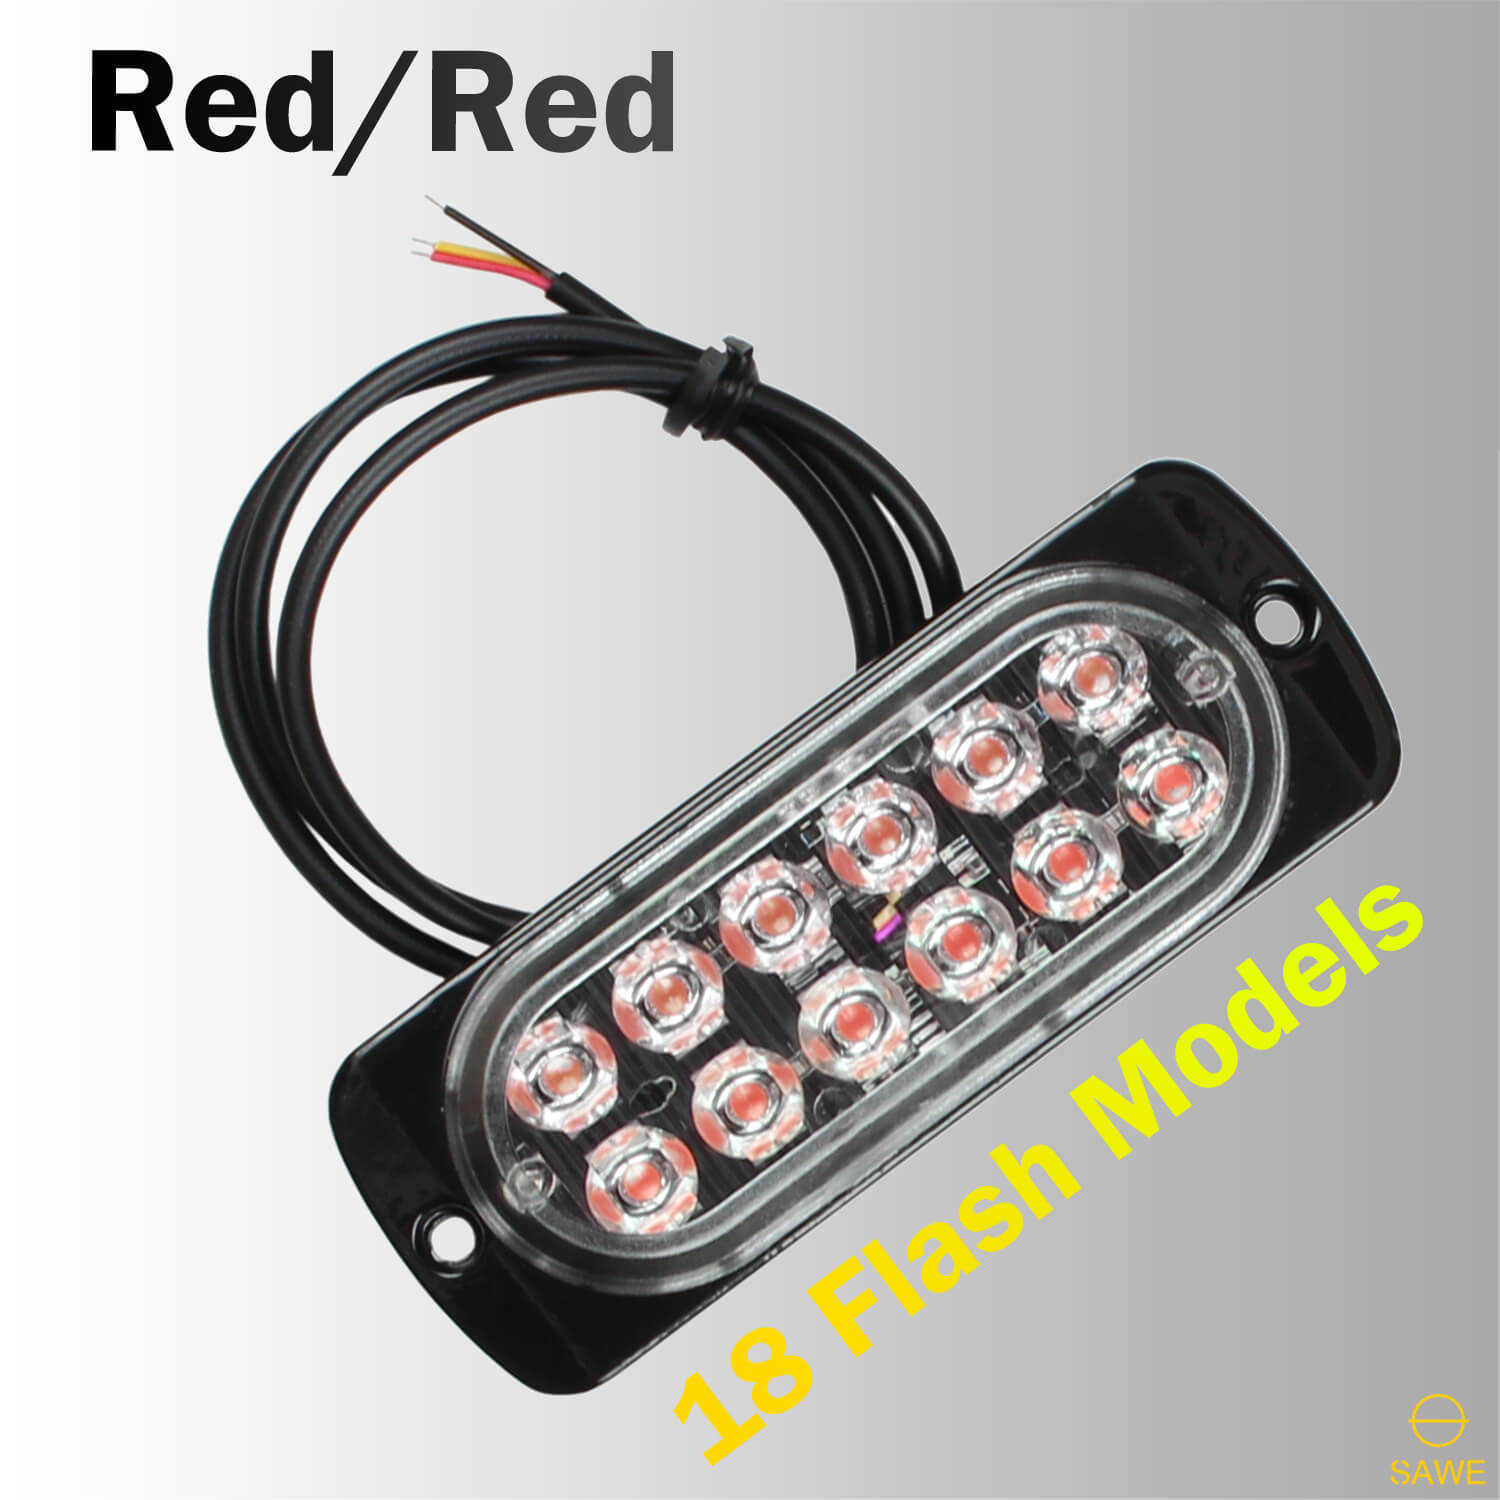 Emergency LED Strobe Lights Bar for Offroad Car Truck Warning Hazard Flash Grille and Surface Mount Light - Red 12-LED